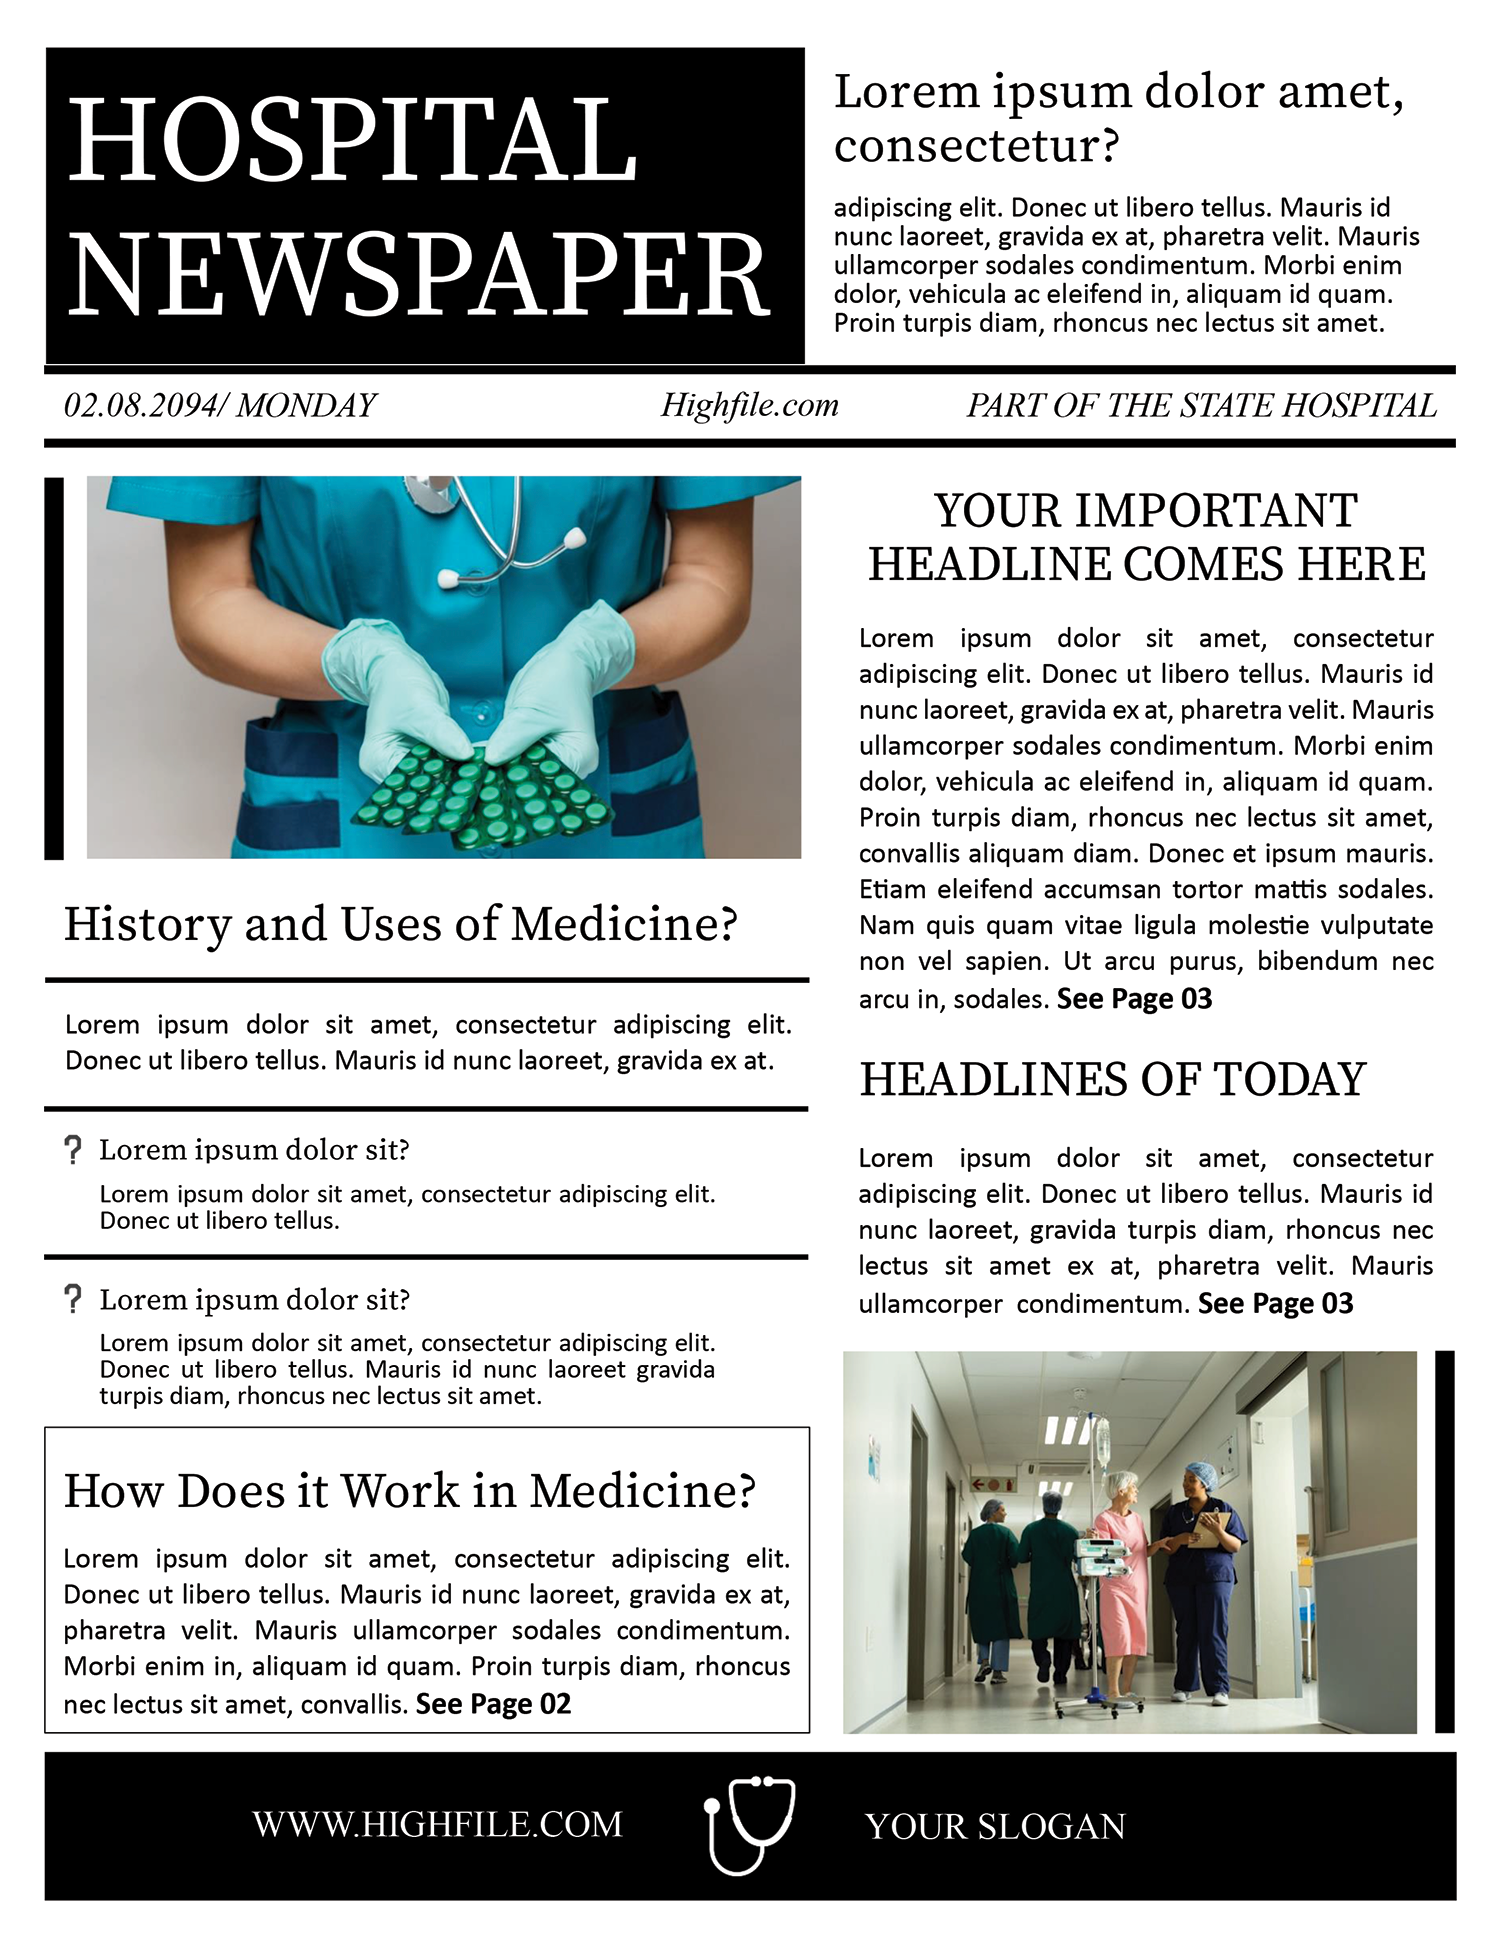 Editable Medical Newspaper Template - Word | Google Docs - Page 01